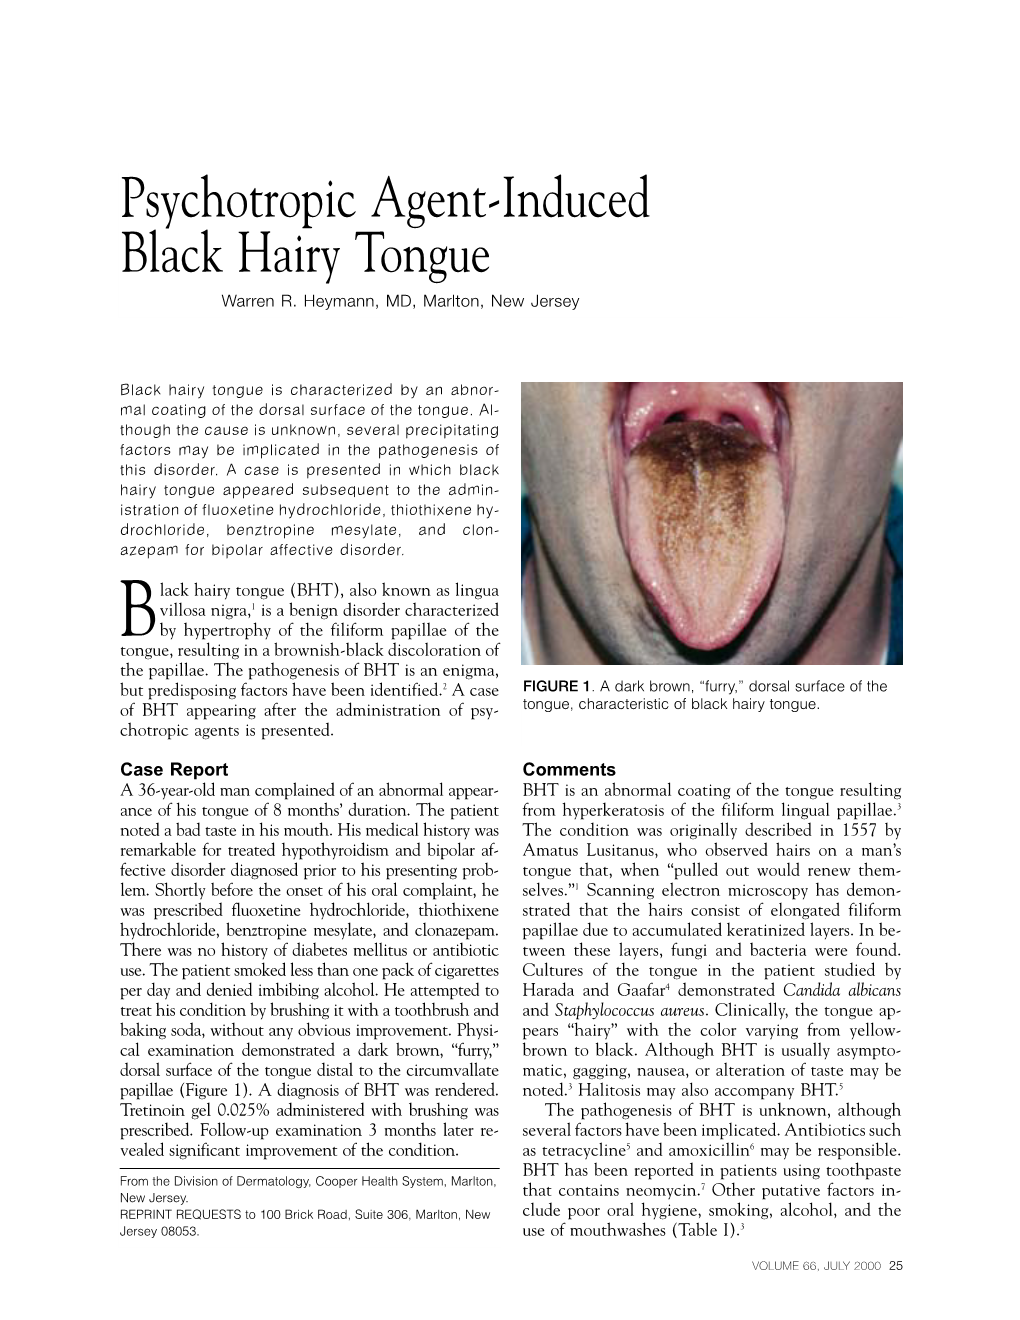 Psychotropic Agent-Induced Black Hairy Tongue Warren R